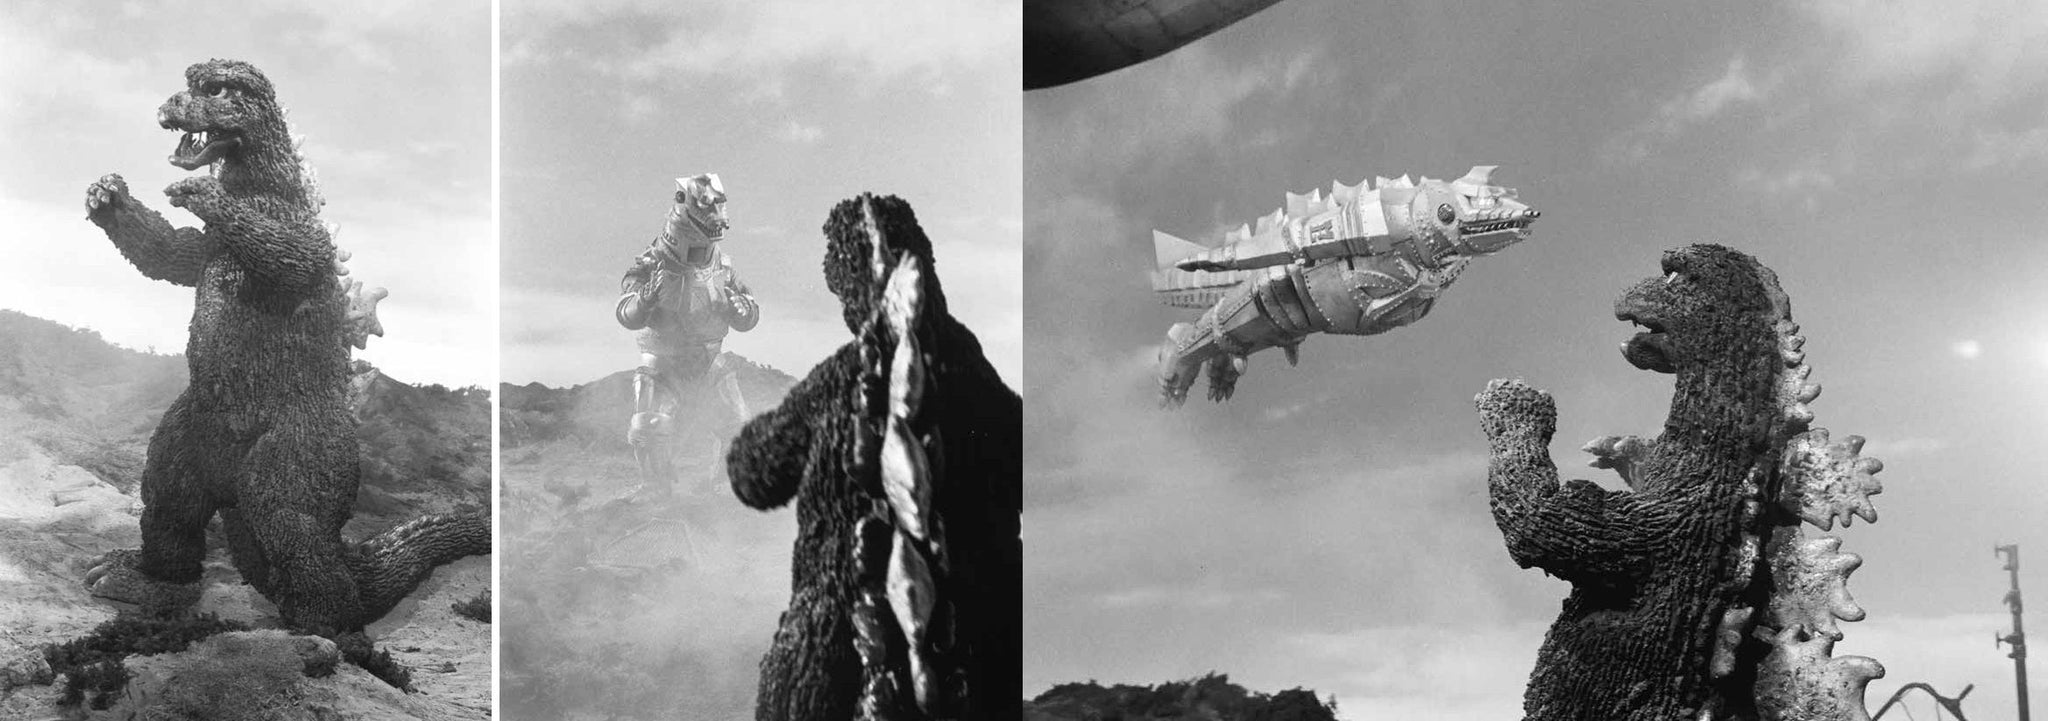 Toho SFX Movies Authentic Visual Book vol.43 Godzilla 1974